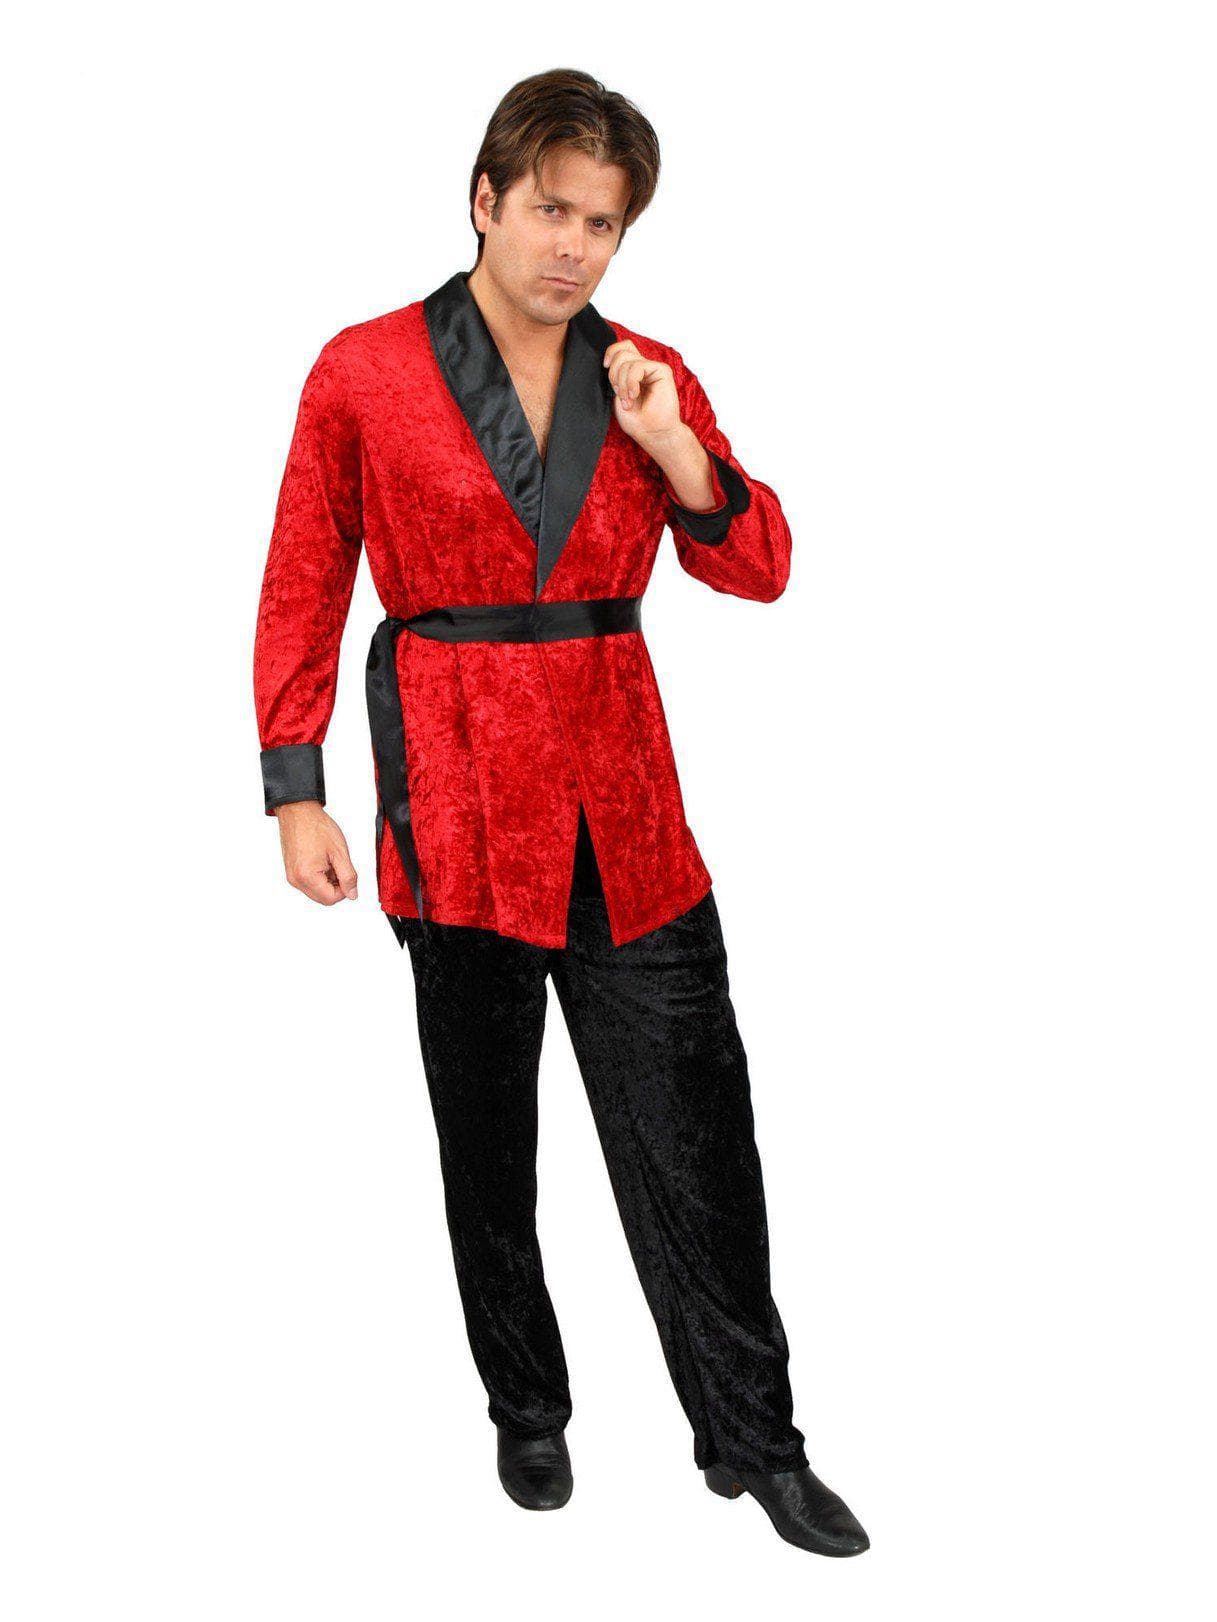 Adult Smoking Jacket Red Costume - costumes.com